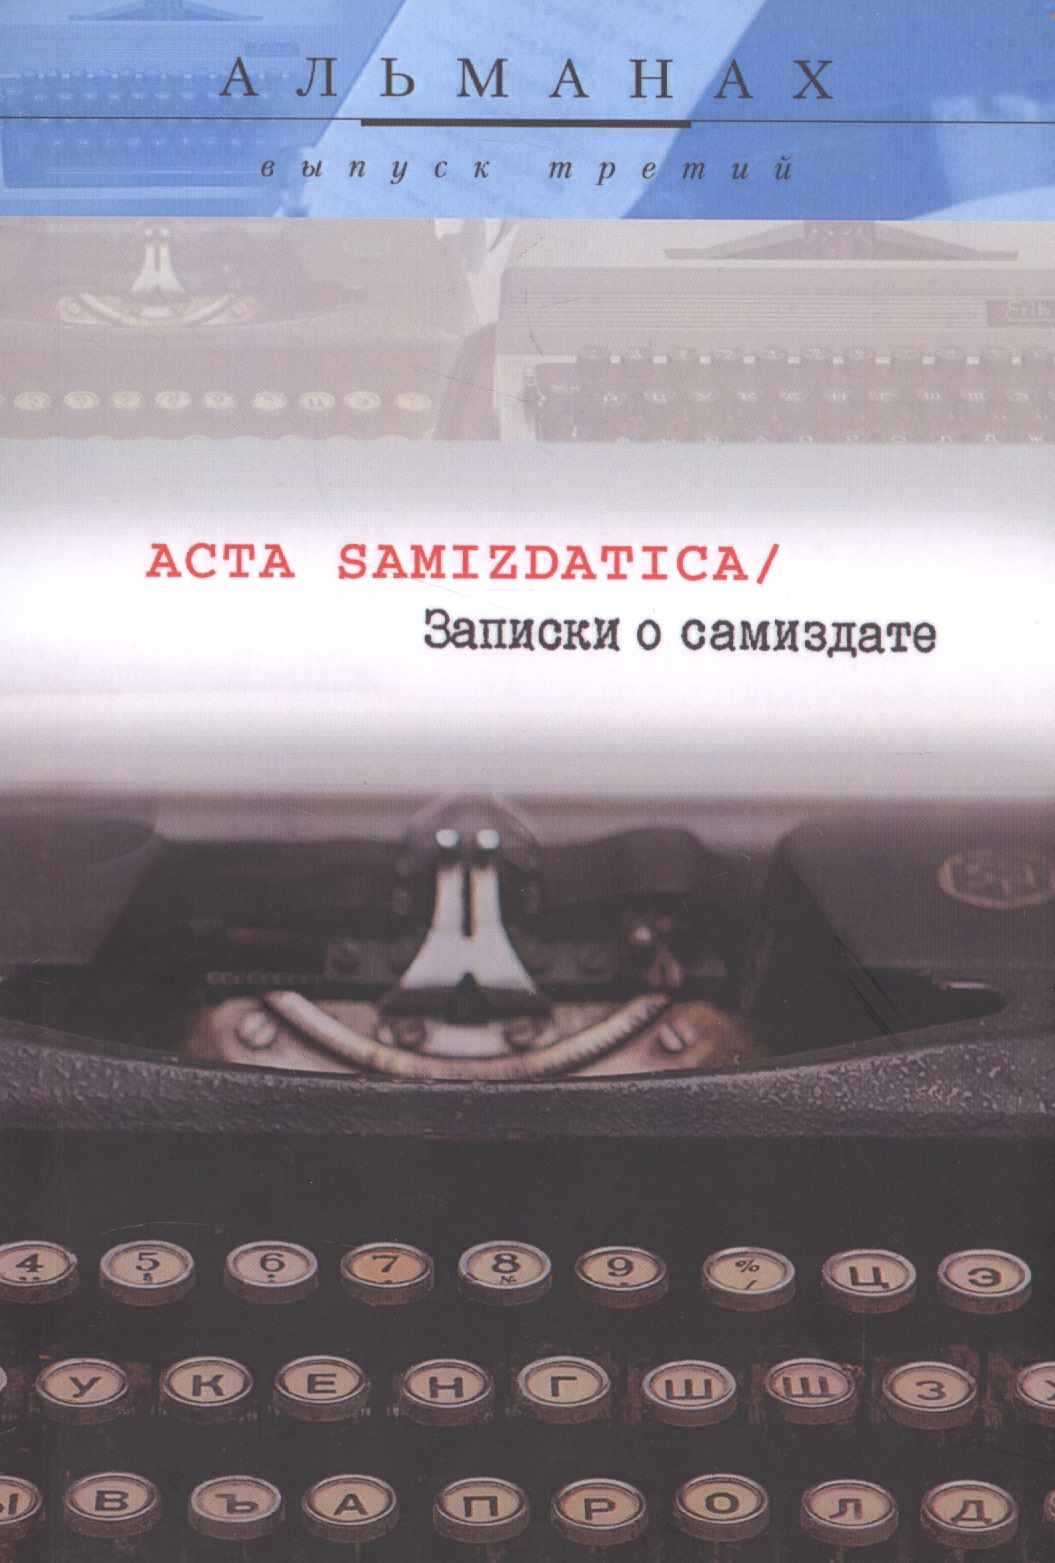    Acta Samizdatica  .3 ()